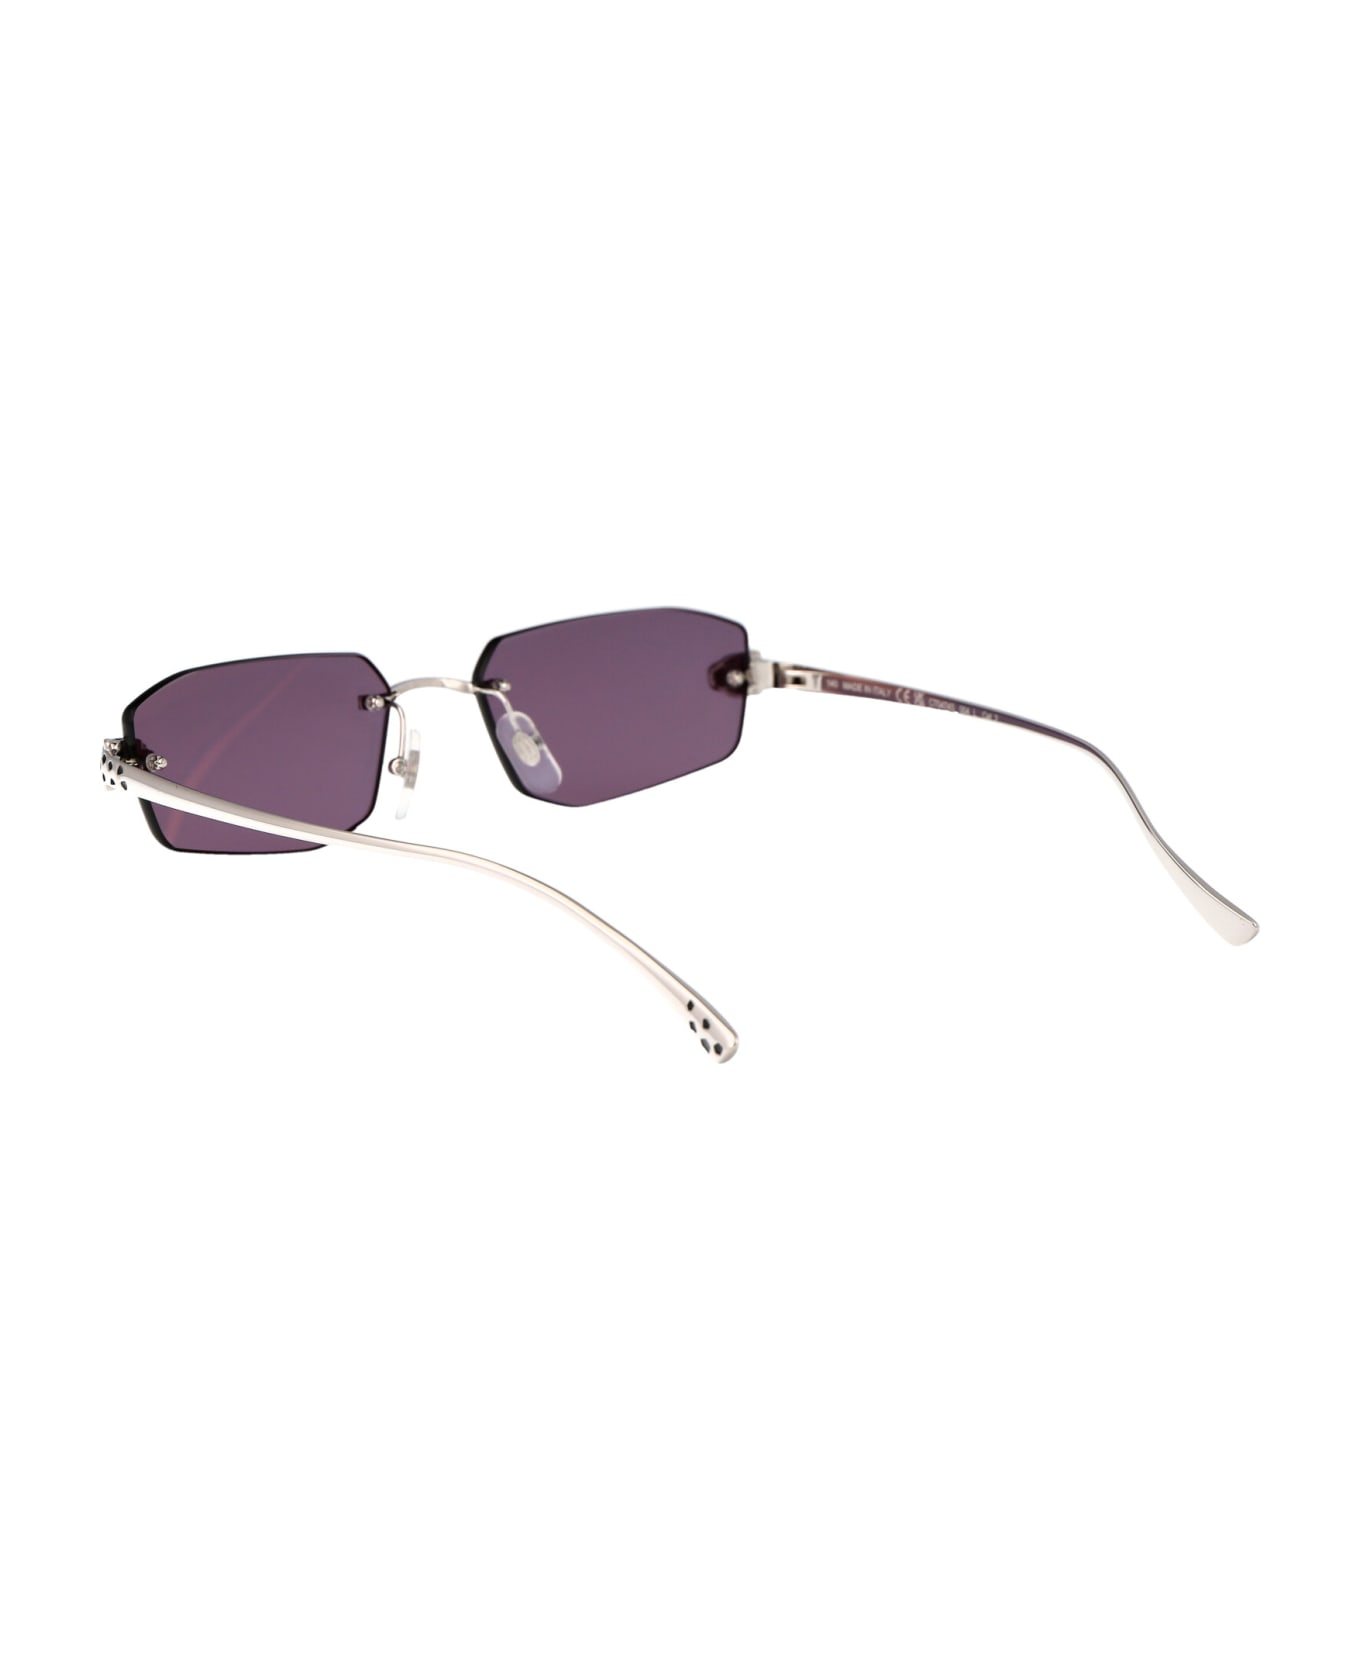 Cartier Eyewear Ct0474s Sunglasses - 004 SILVER SILVER VIOLET